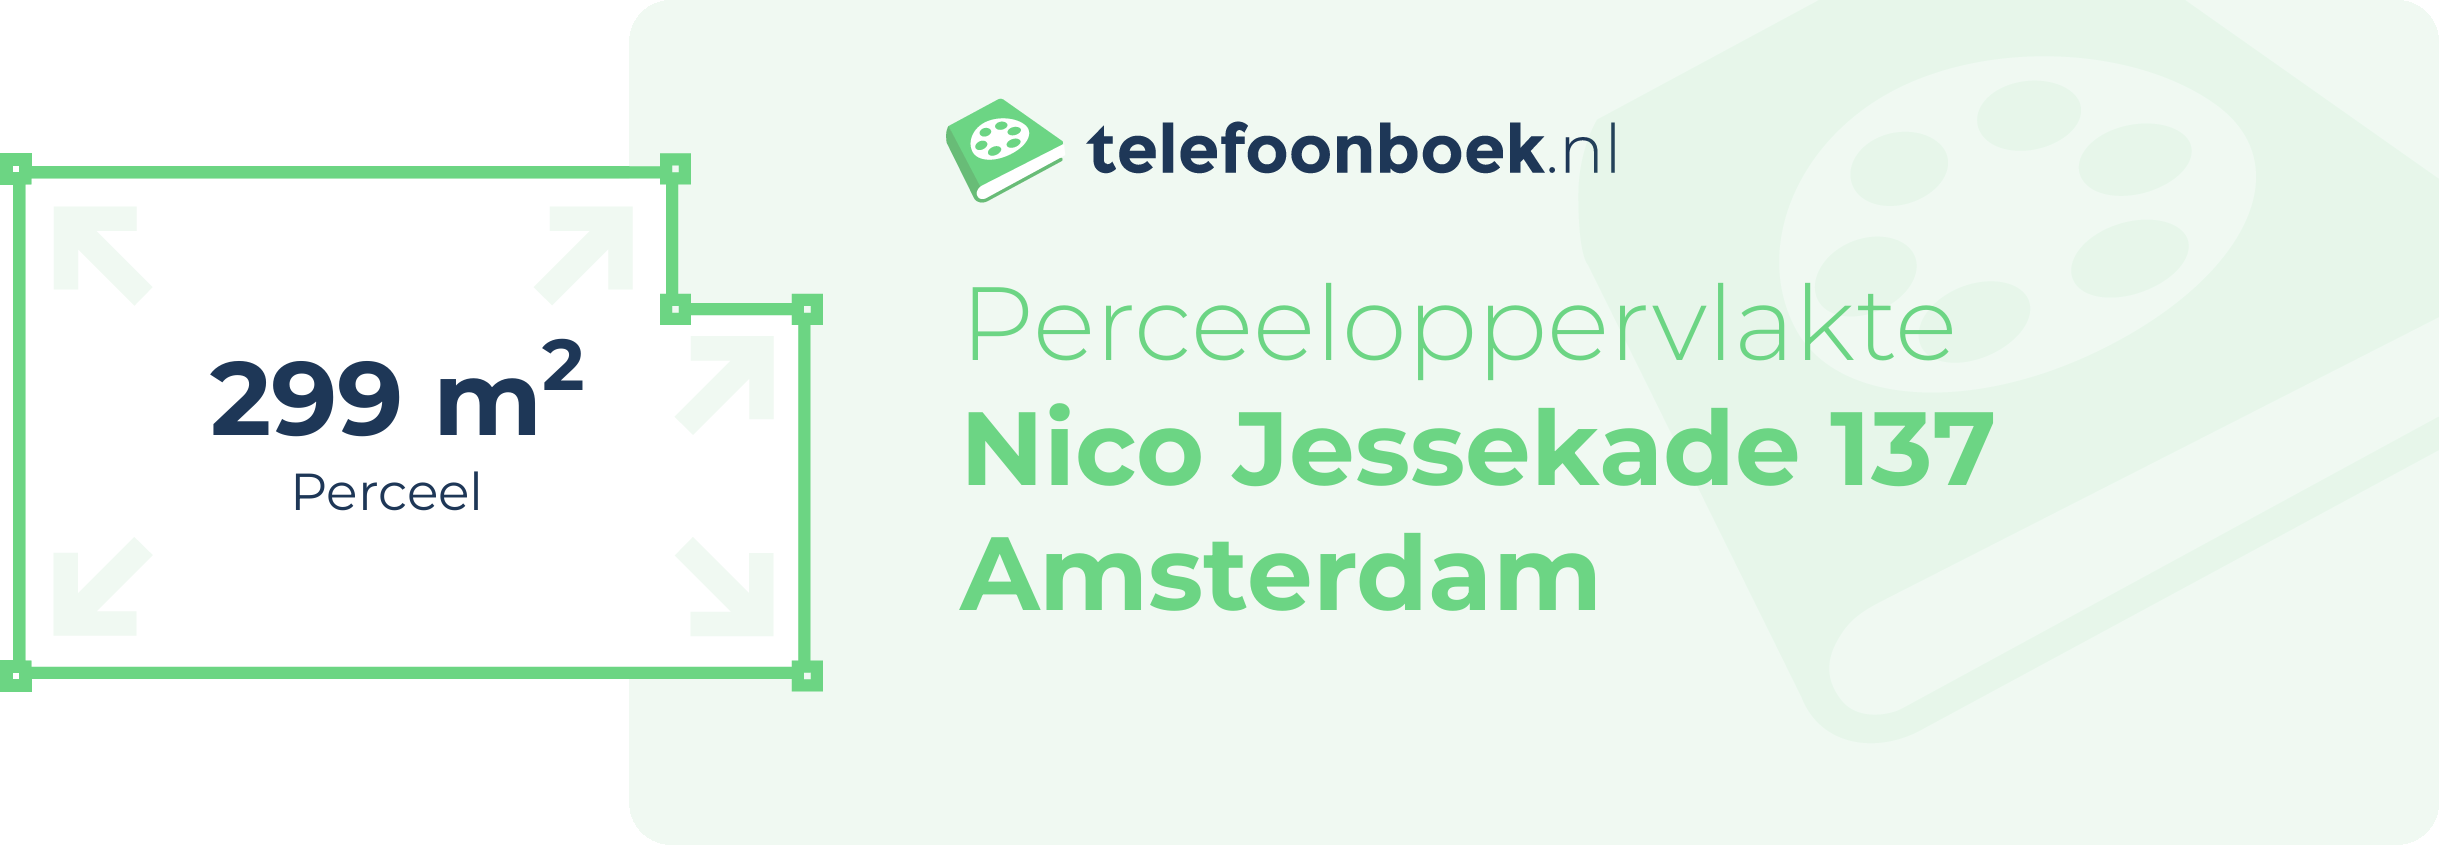 Perceeloppervlakte Nico Jessekade 137 Amsterdam